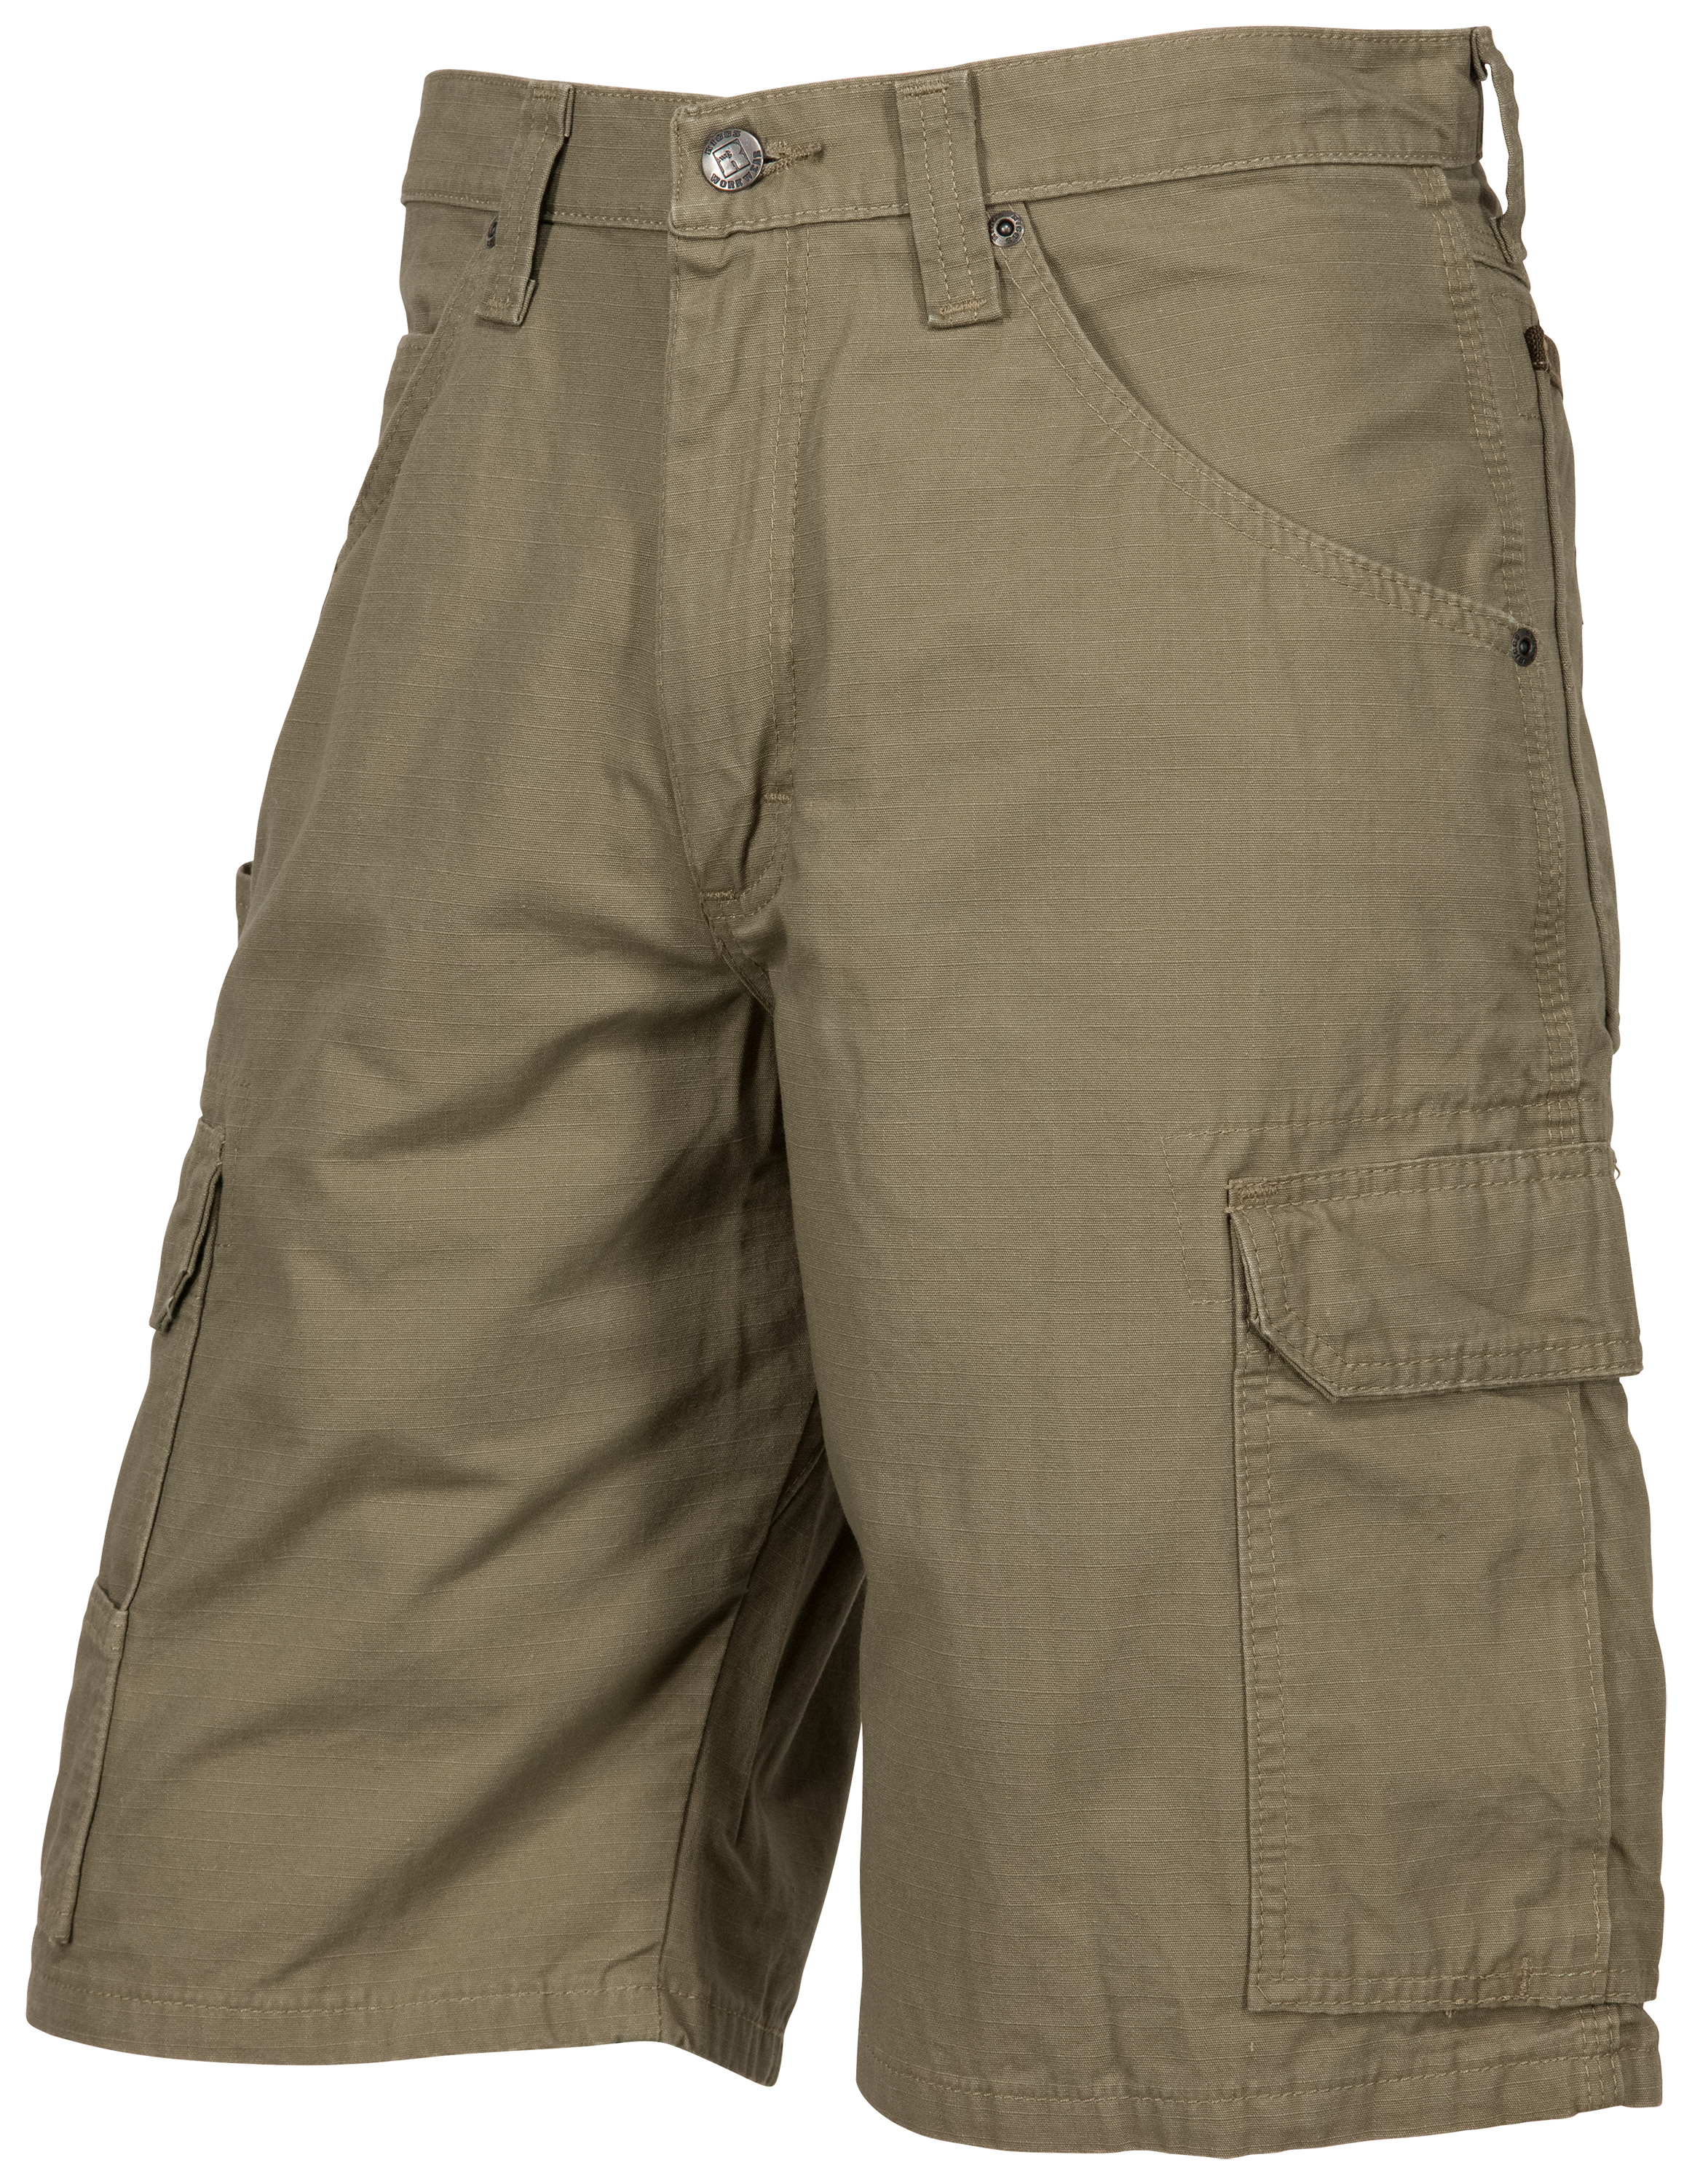 Wrangler Riggs Workwear Ripstop Ranger Cargo Shorts for Men | Cabela's